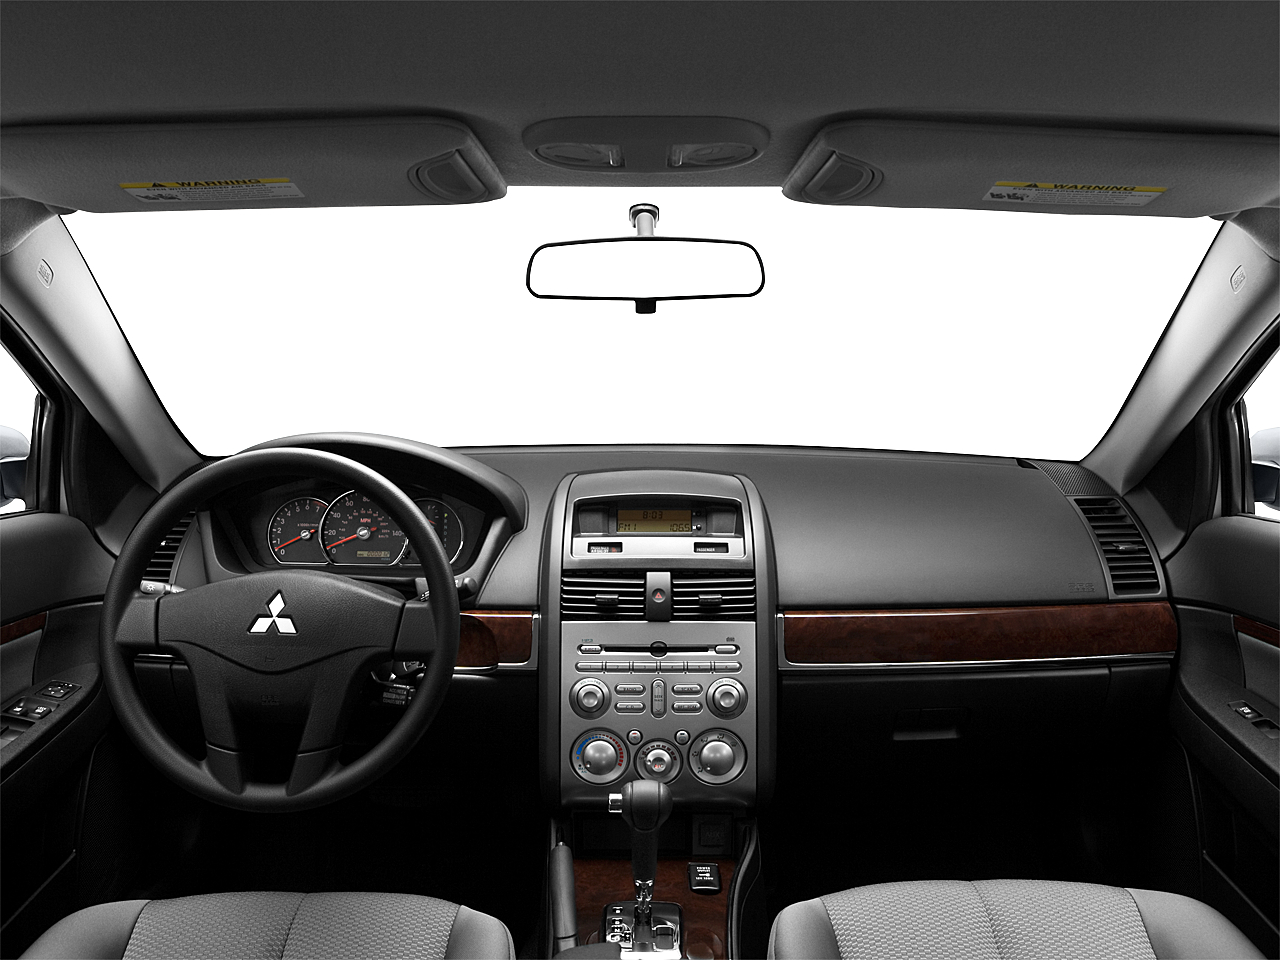 2010 Mitsubishi Galant SE 4dr Sedan - Research - GrooveCar